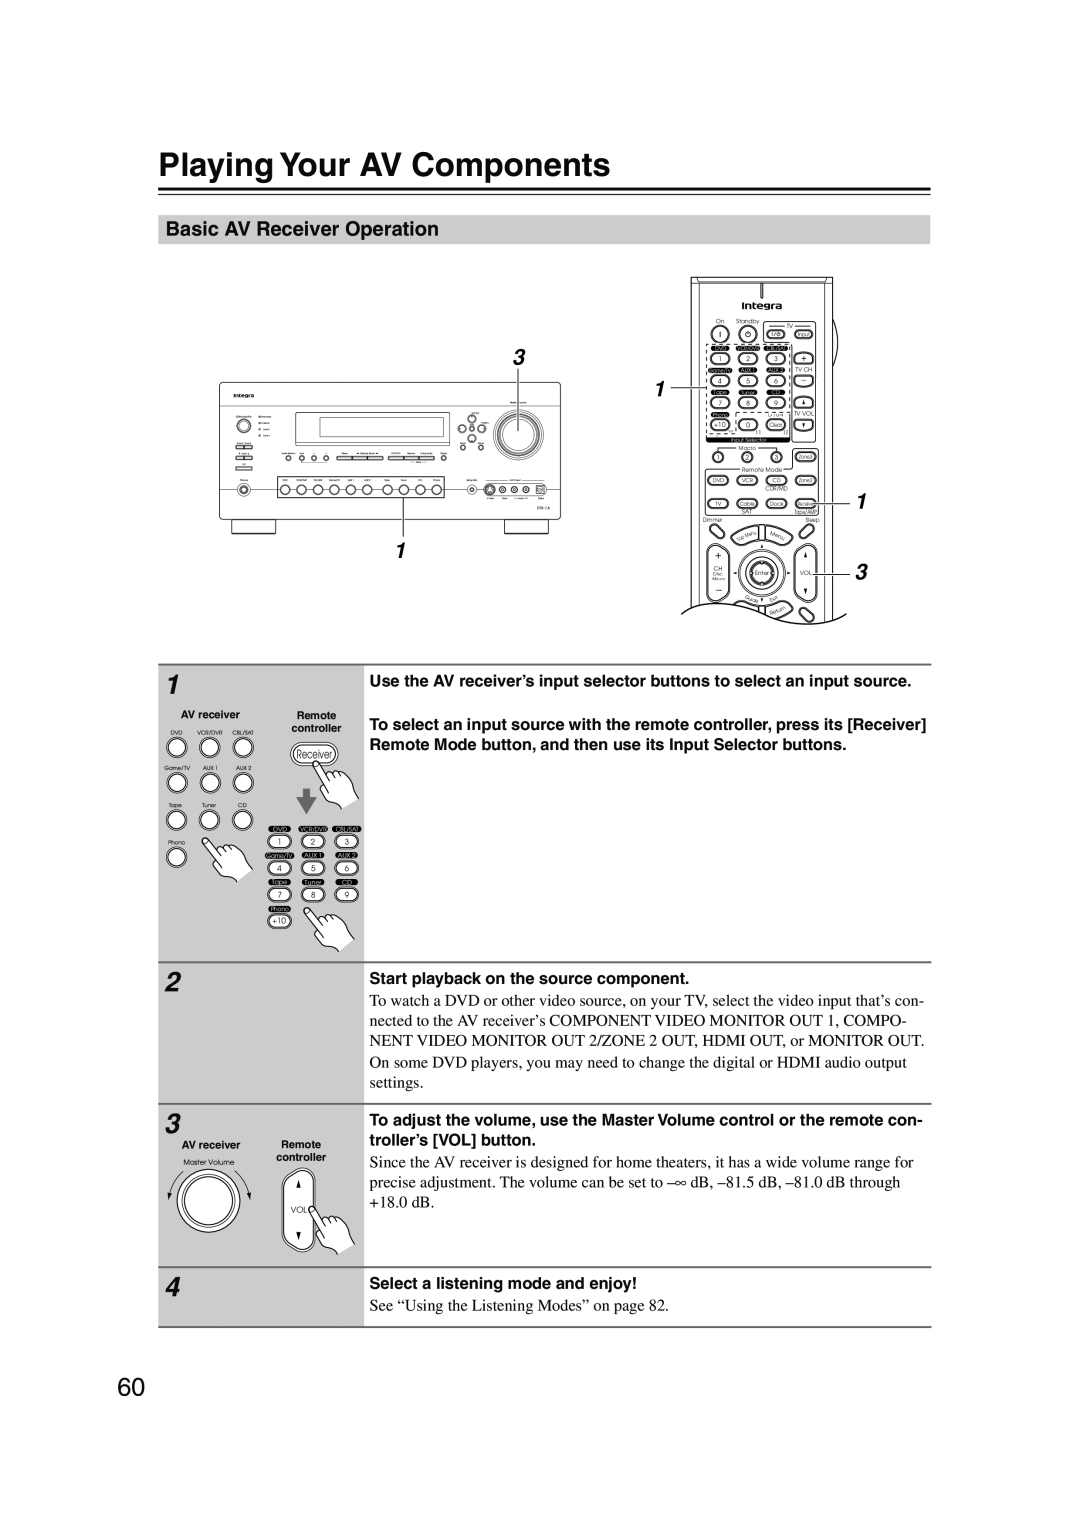 Integra DTR-7.8 instruction manual Playing Your AV Components, Basic AV Receiver Operation 